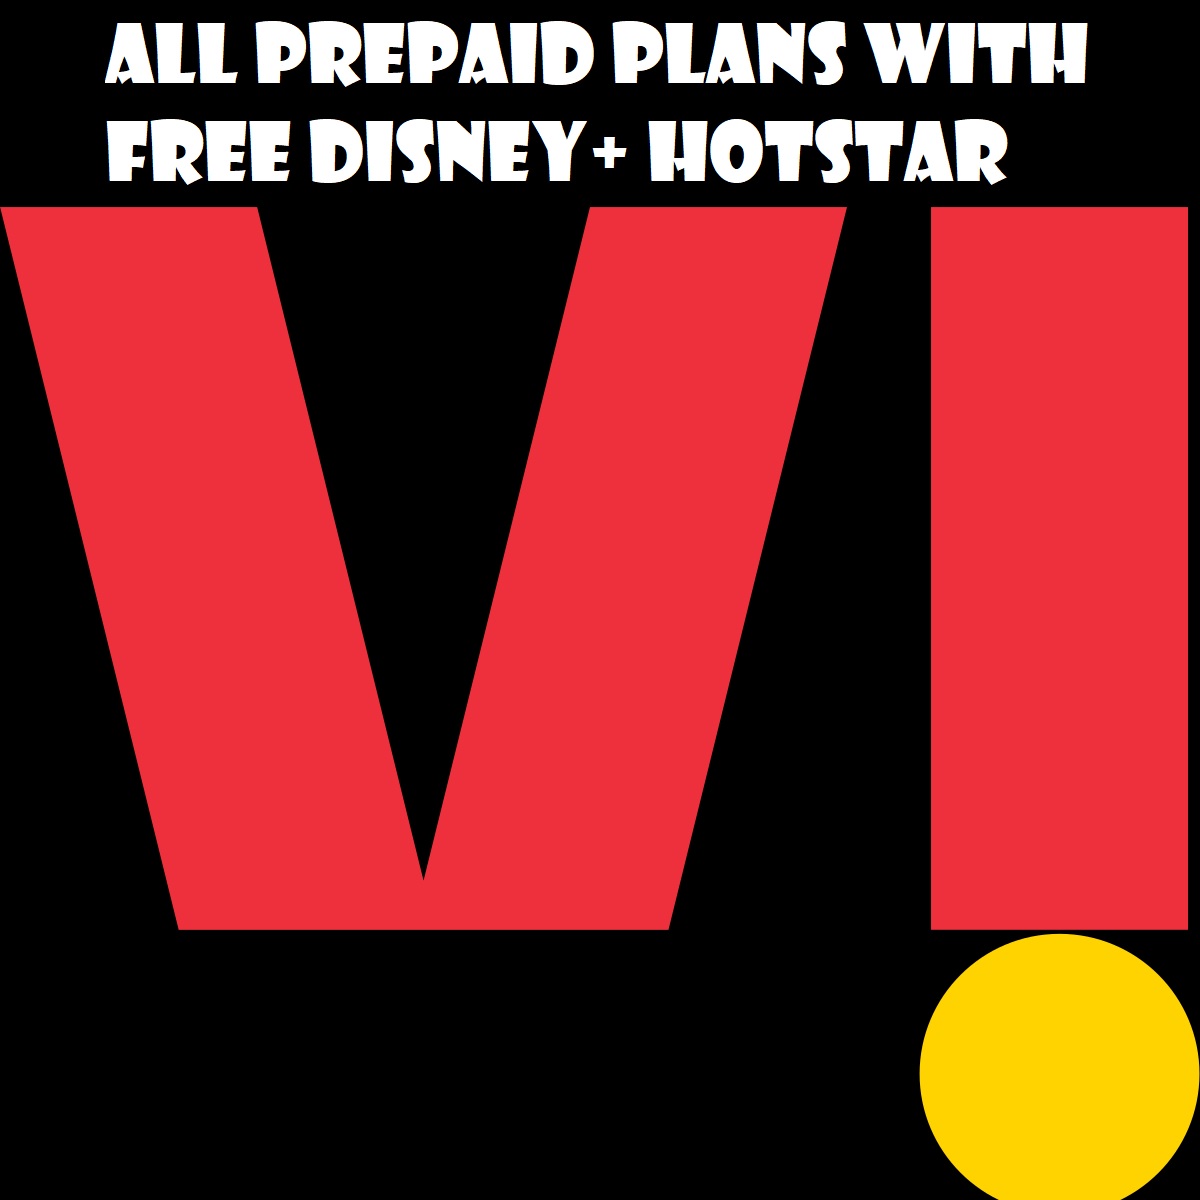 Vodafone Idea aka Vi; all prepaid plans with free Disney+ Hotstar subscription